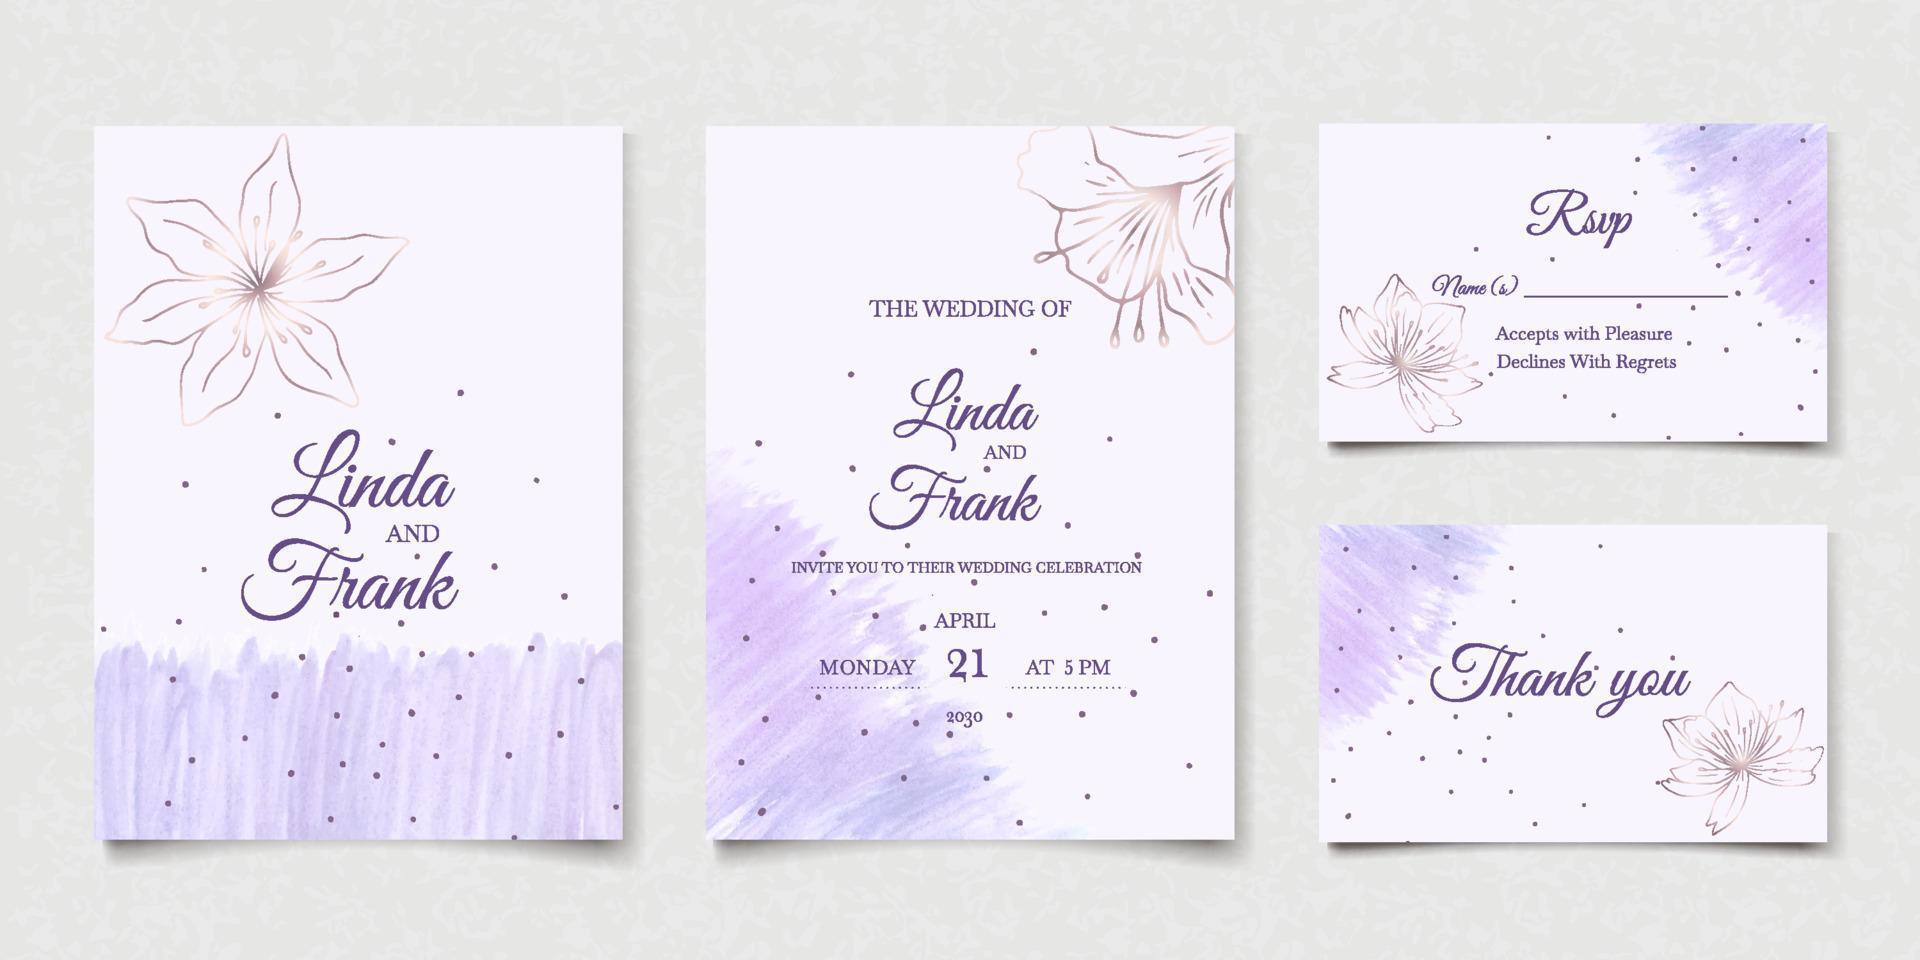 Abstract watercolor purple floral wedding invitation card set vector